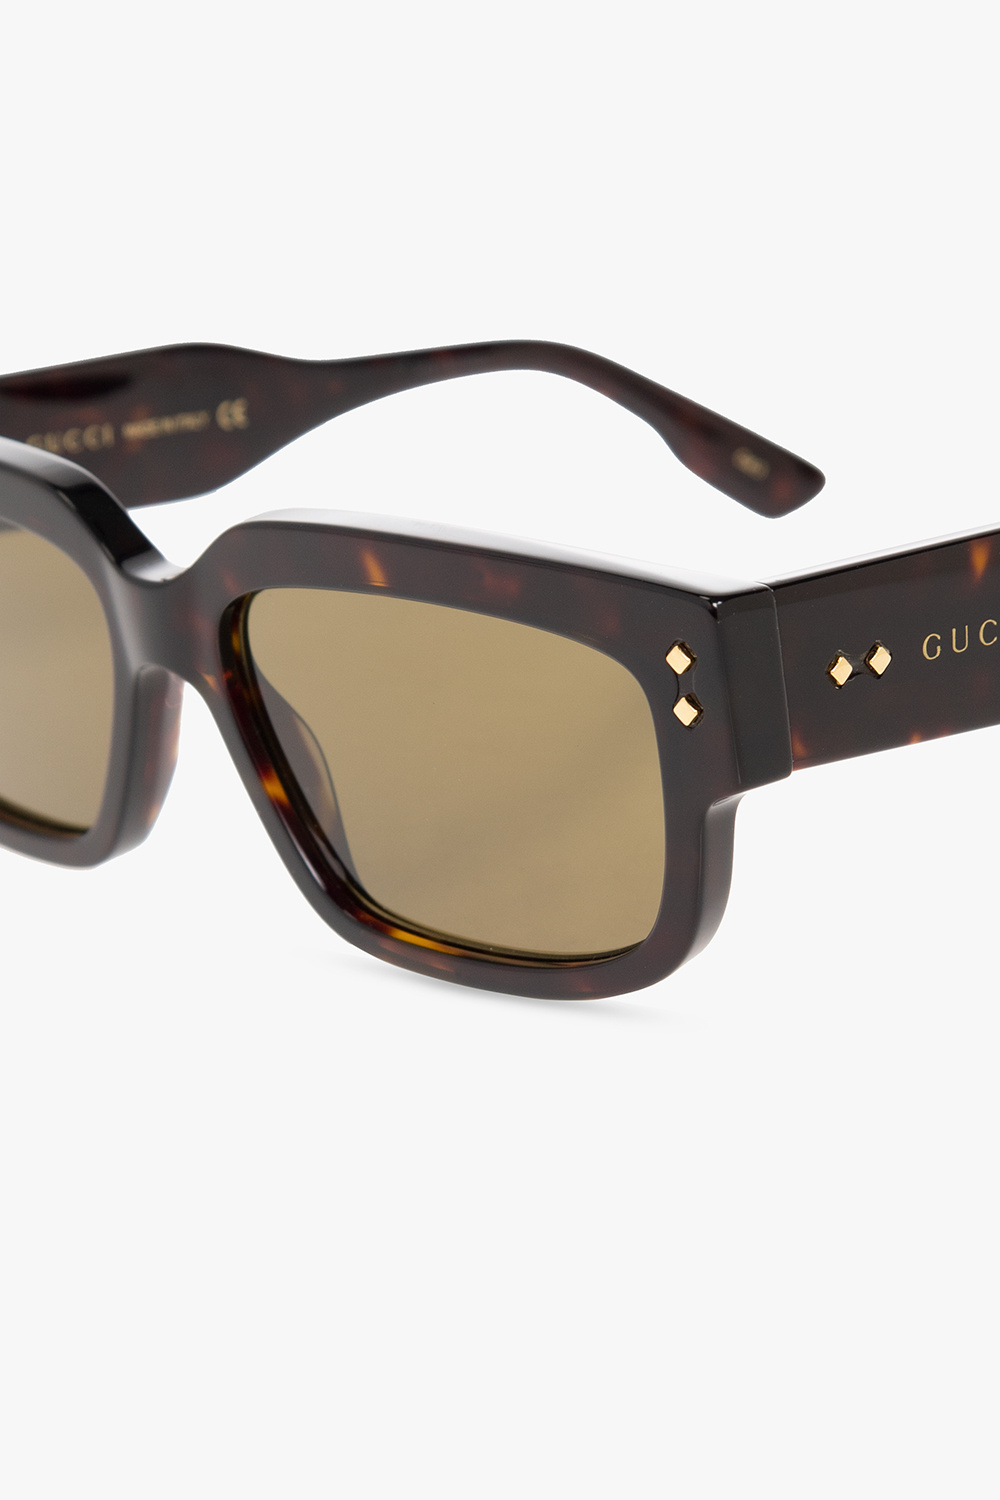 Gucci Blue Tortoise Shell Acetate Frames Foliage Printed Lens Umbrage Sunglasses